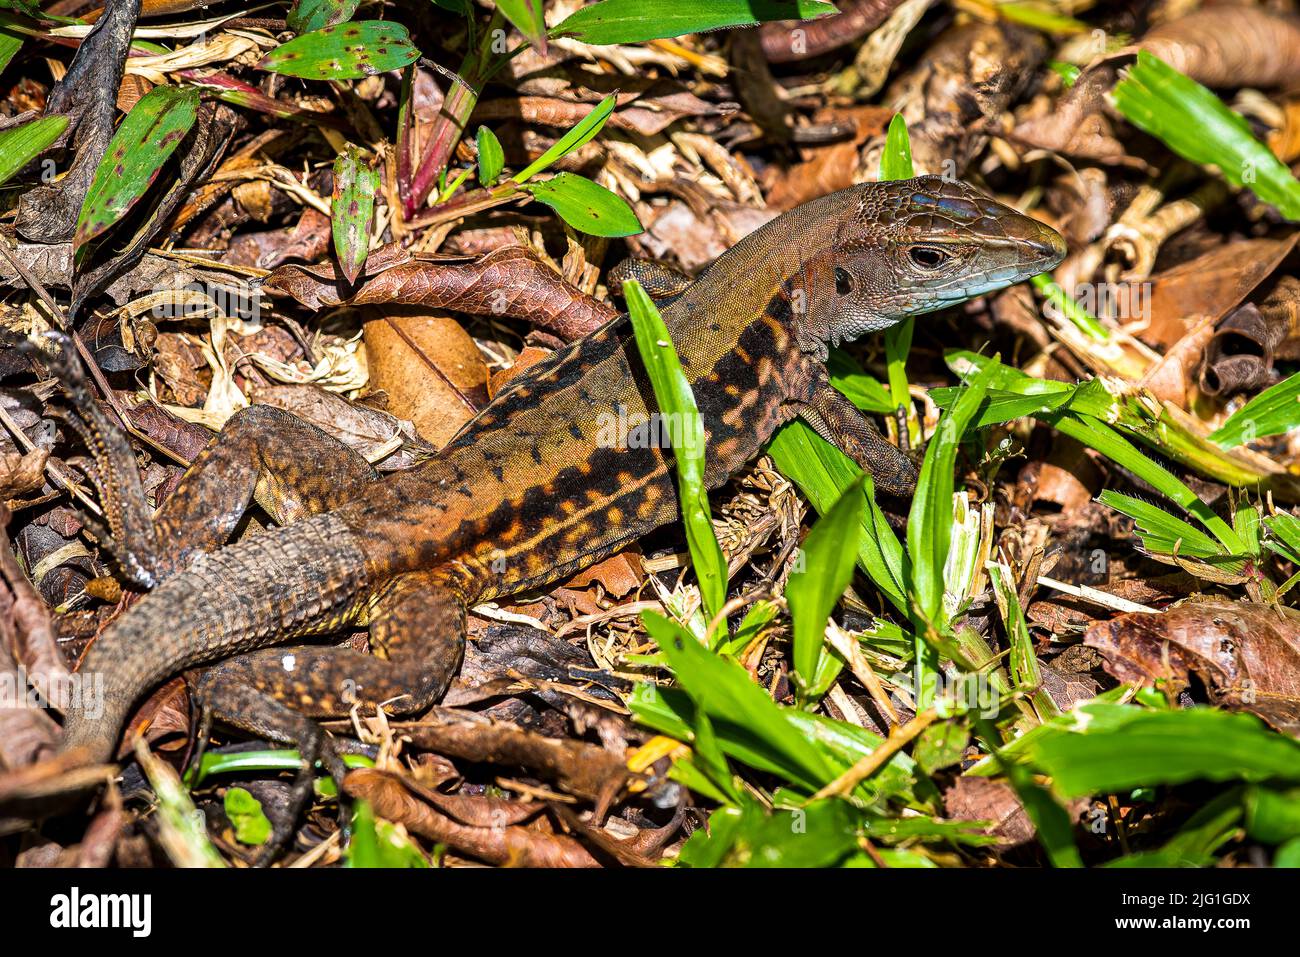 Little lizard reptile image Stock Photo